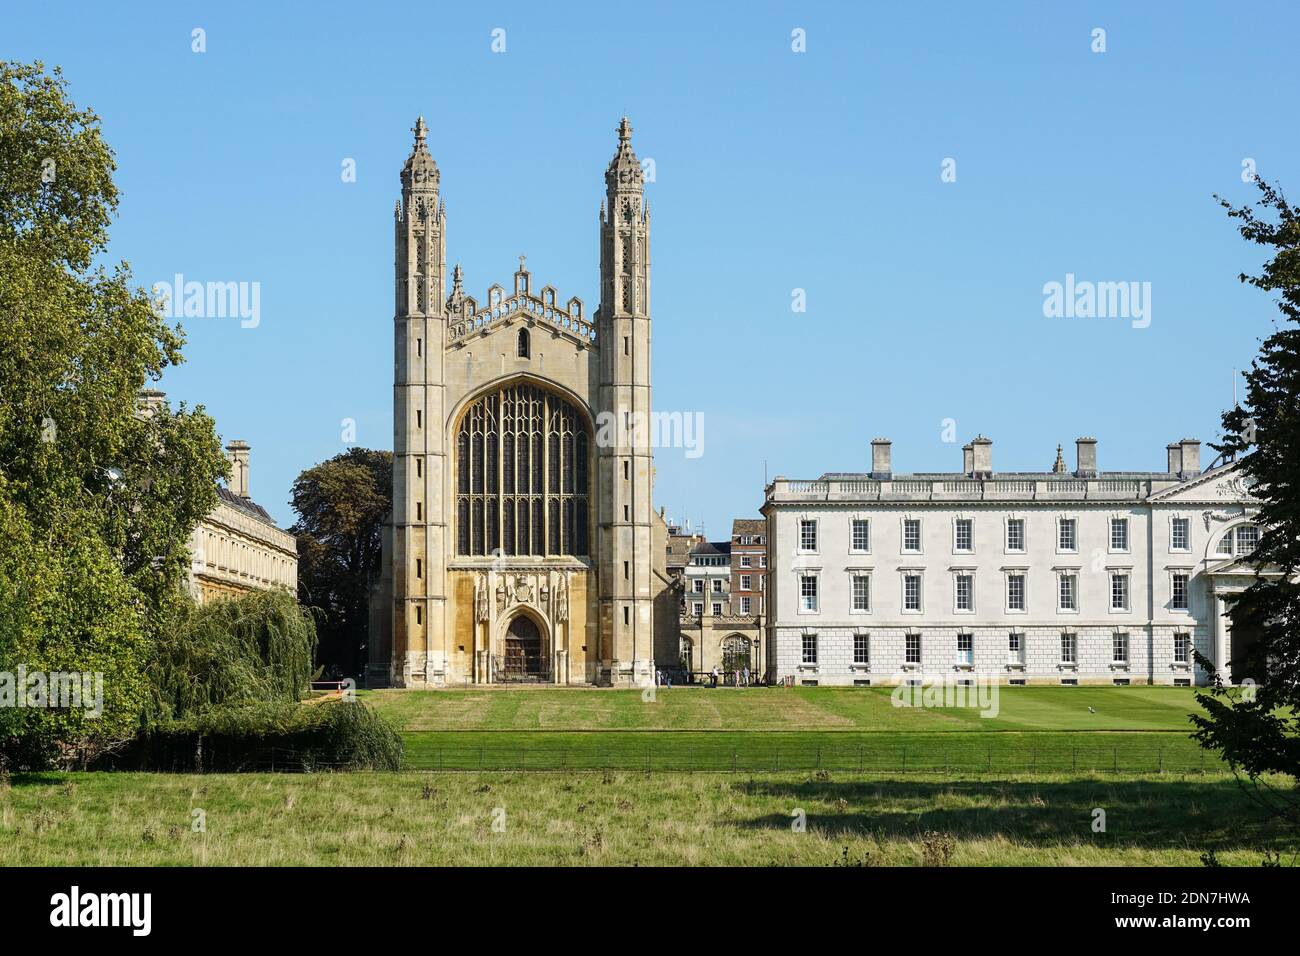 King's College Chapel in der University of Cambridge, von hinten gesehen, Cambridge Cambridgeshire England Großbritannien Stockfoto